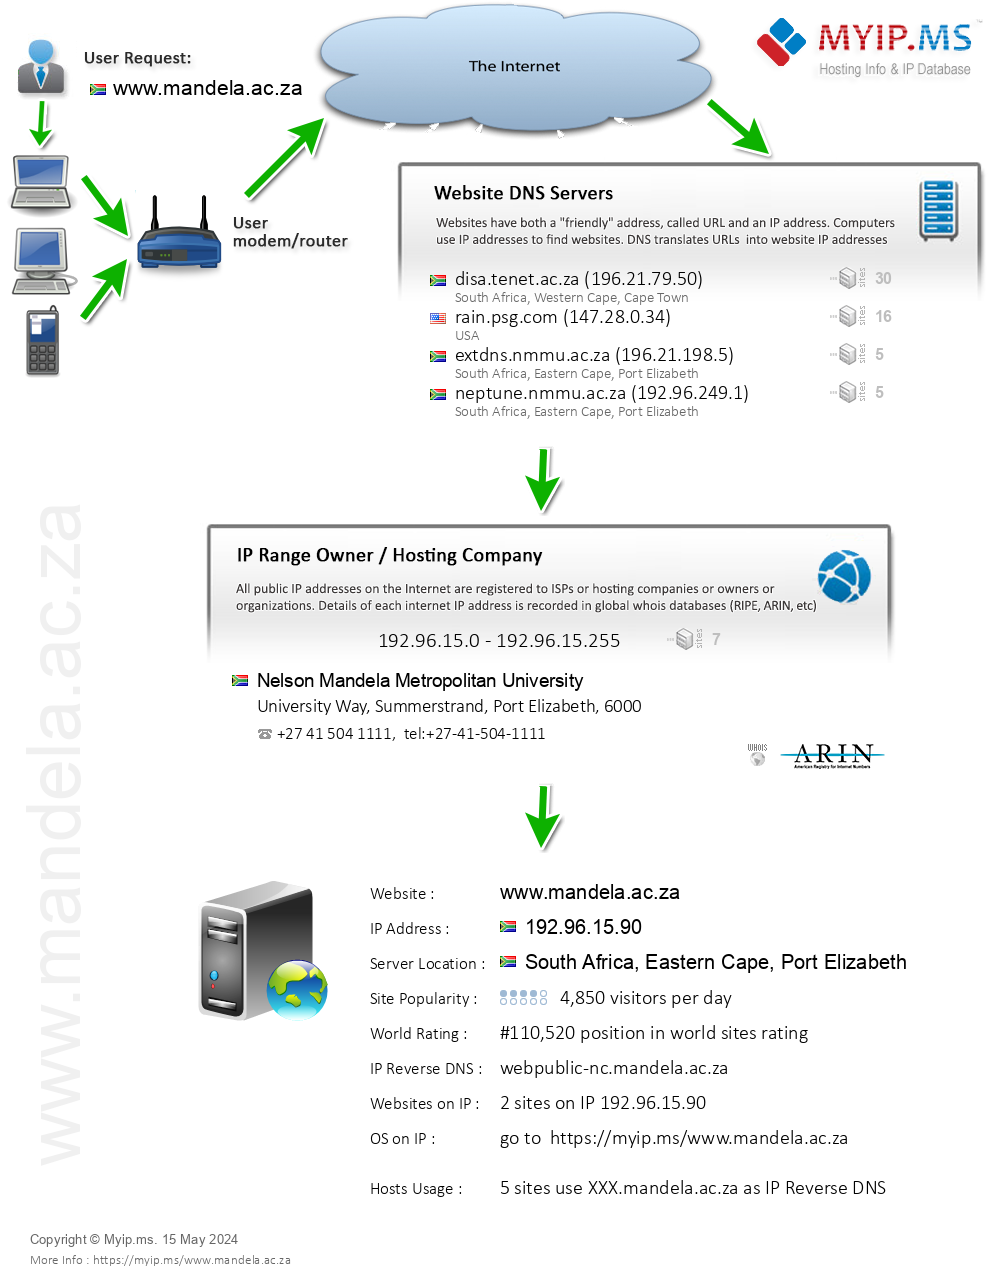 Mandela.ac.za - Website Hosting Visual IP Diagram